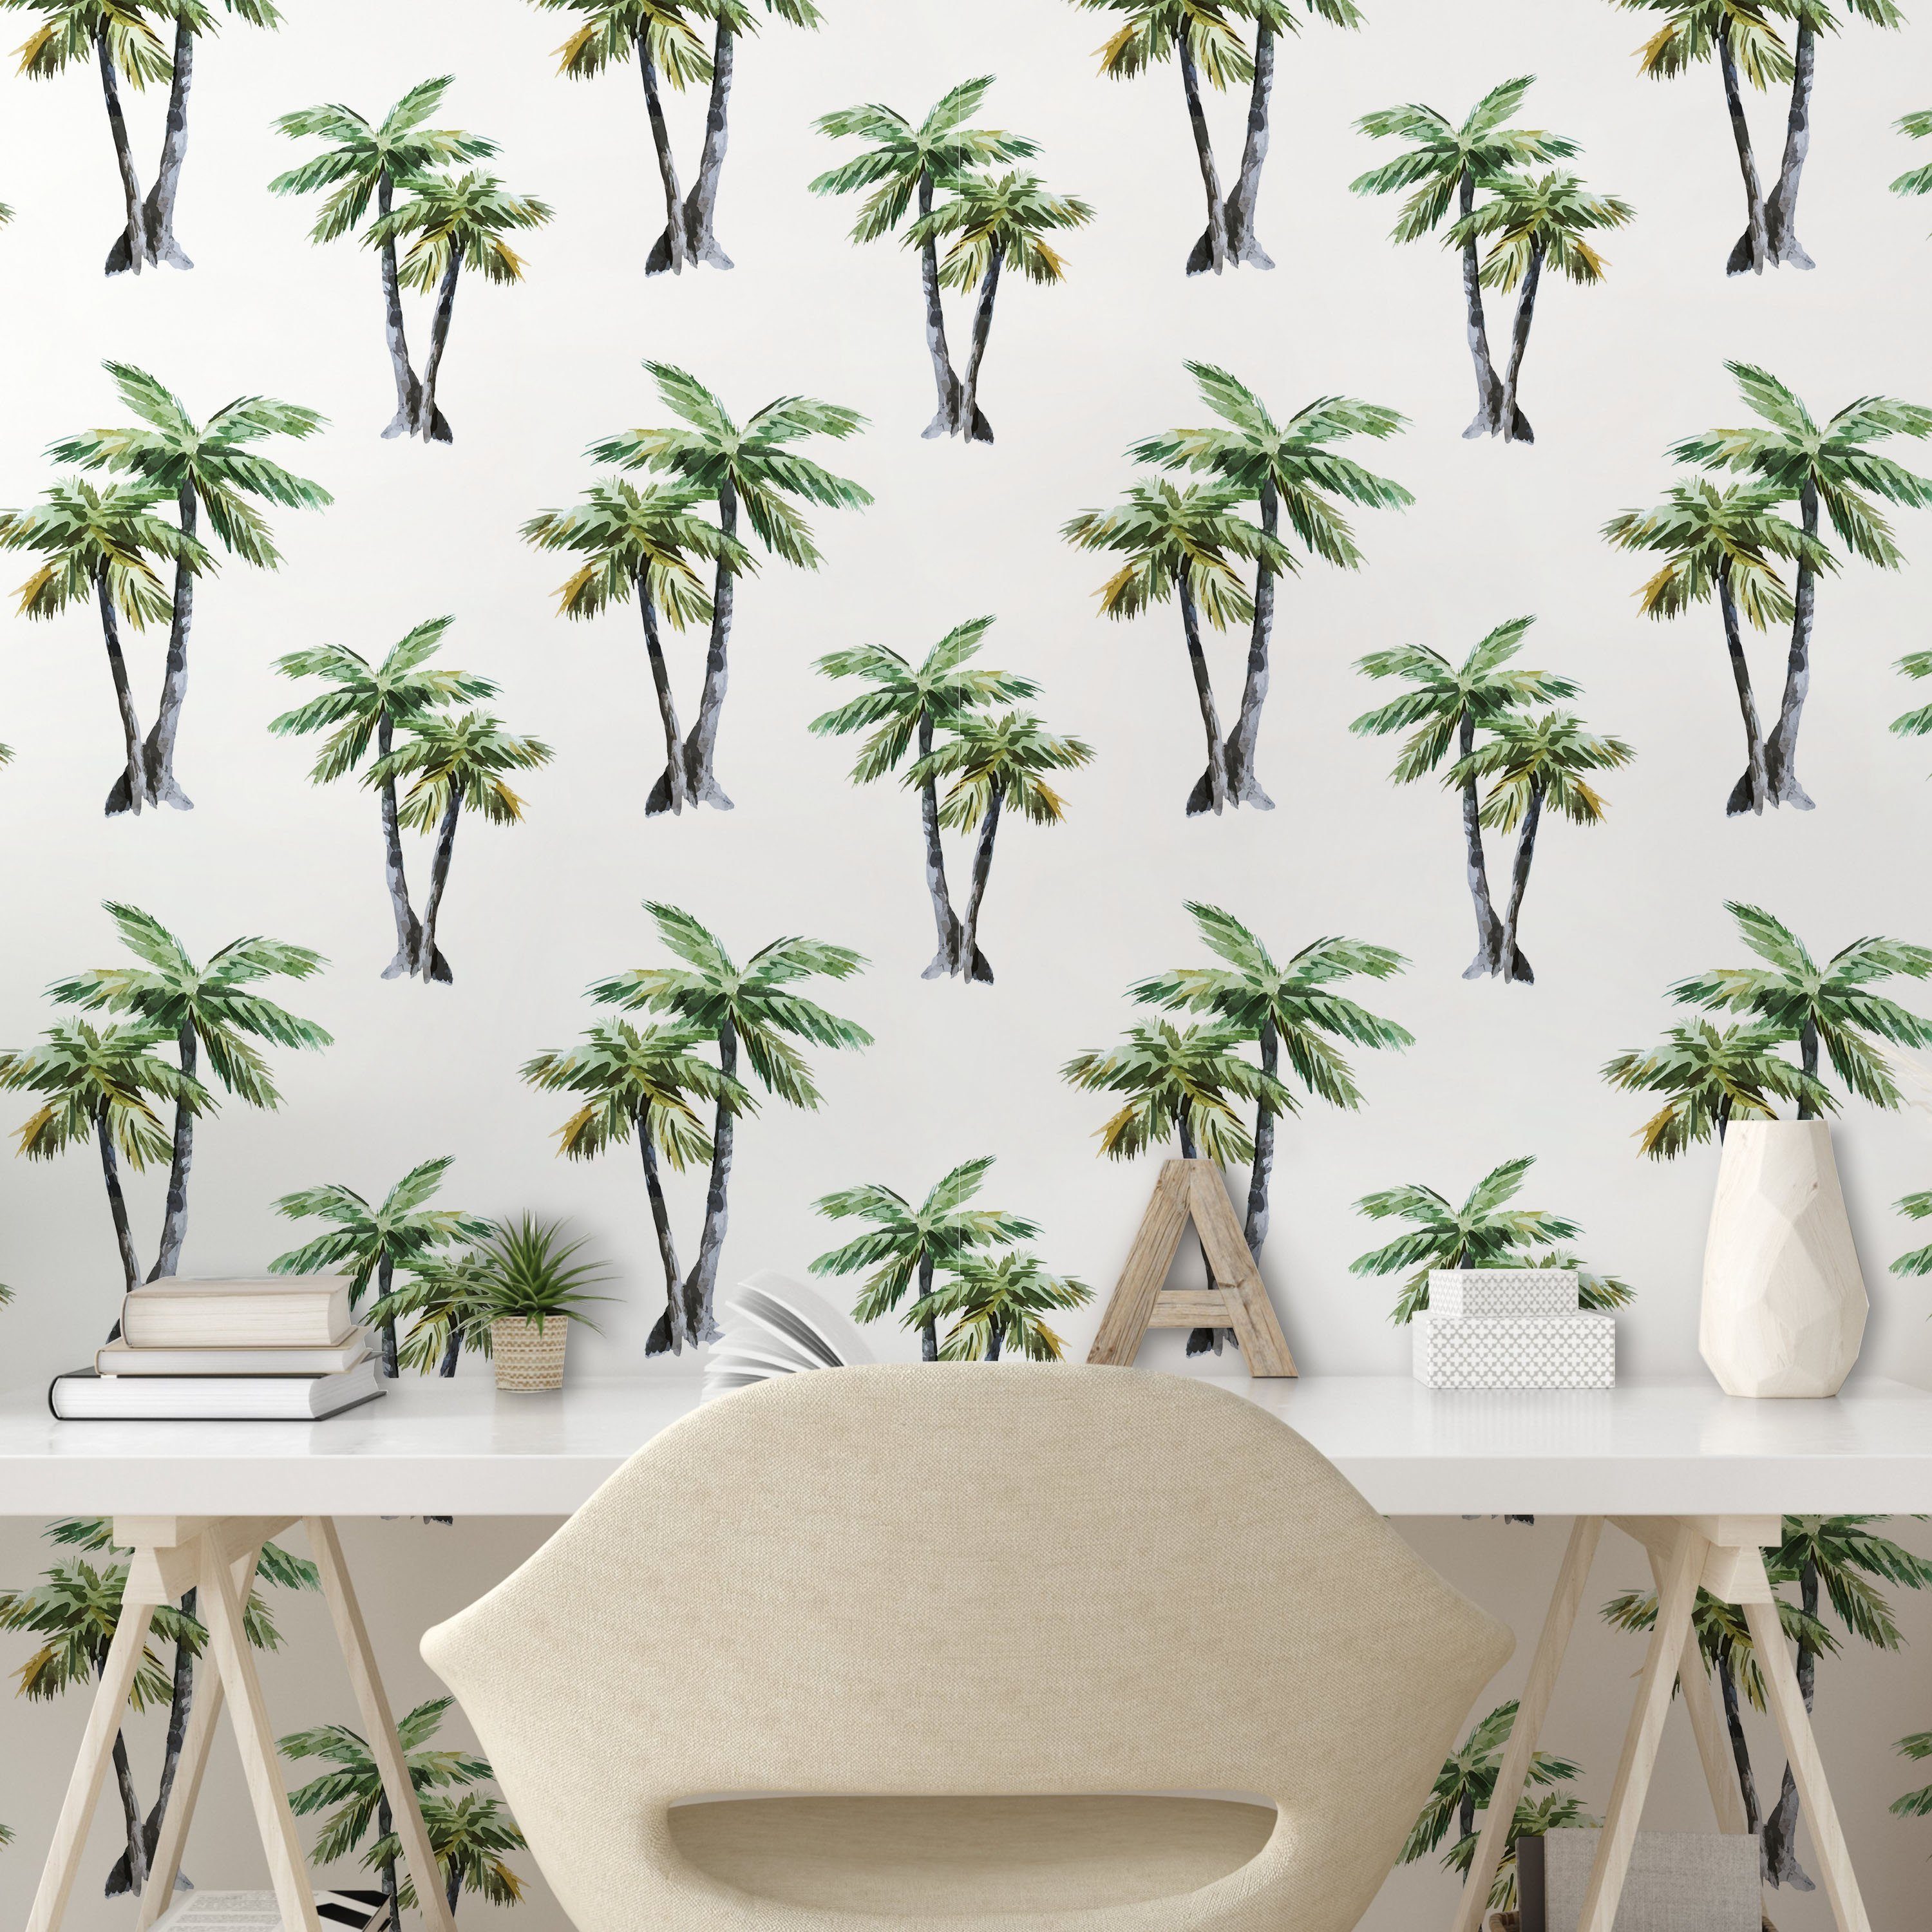 Abakuhaus Vinyltapete selbstklebendes Küchenakzent, Wohnzimmer Aquarell-Bäume Palme Kunst